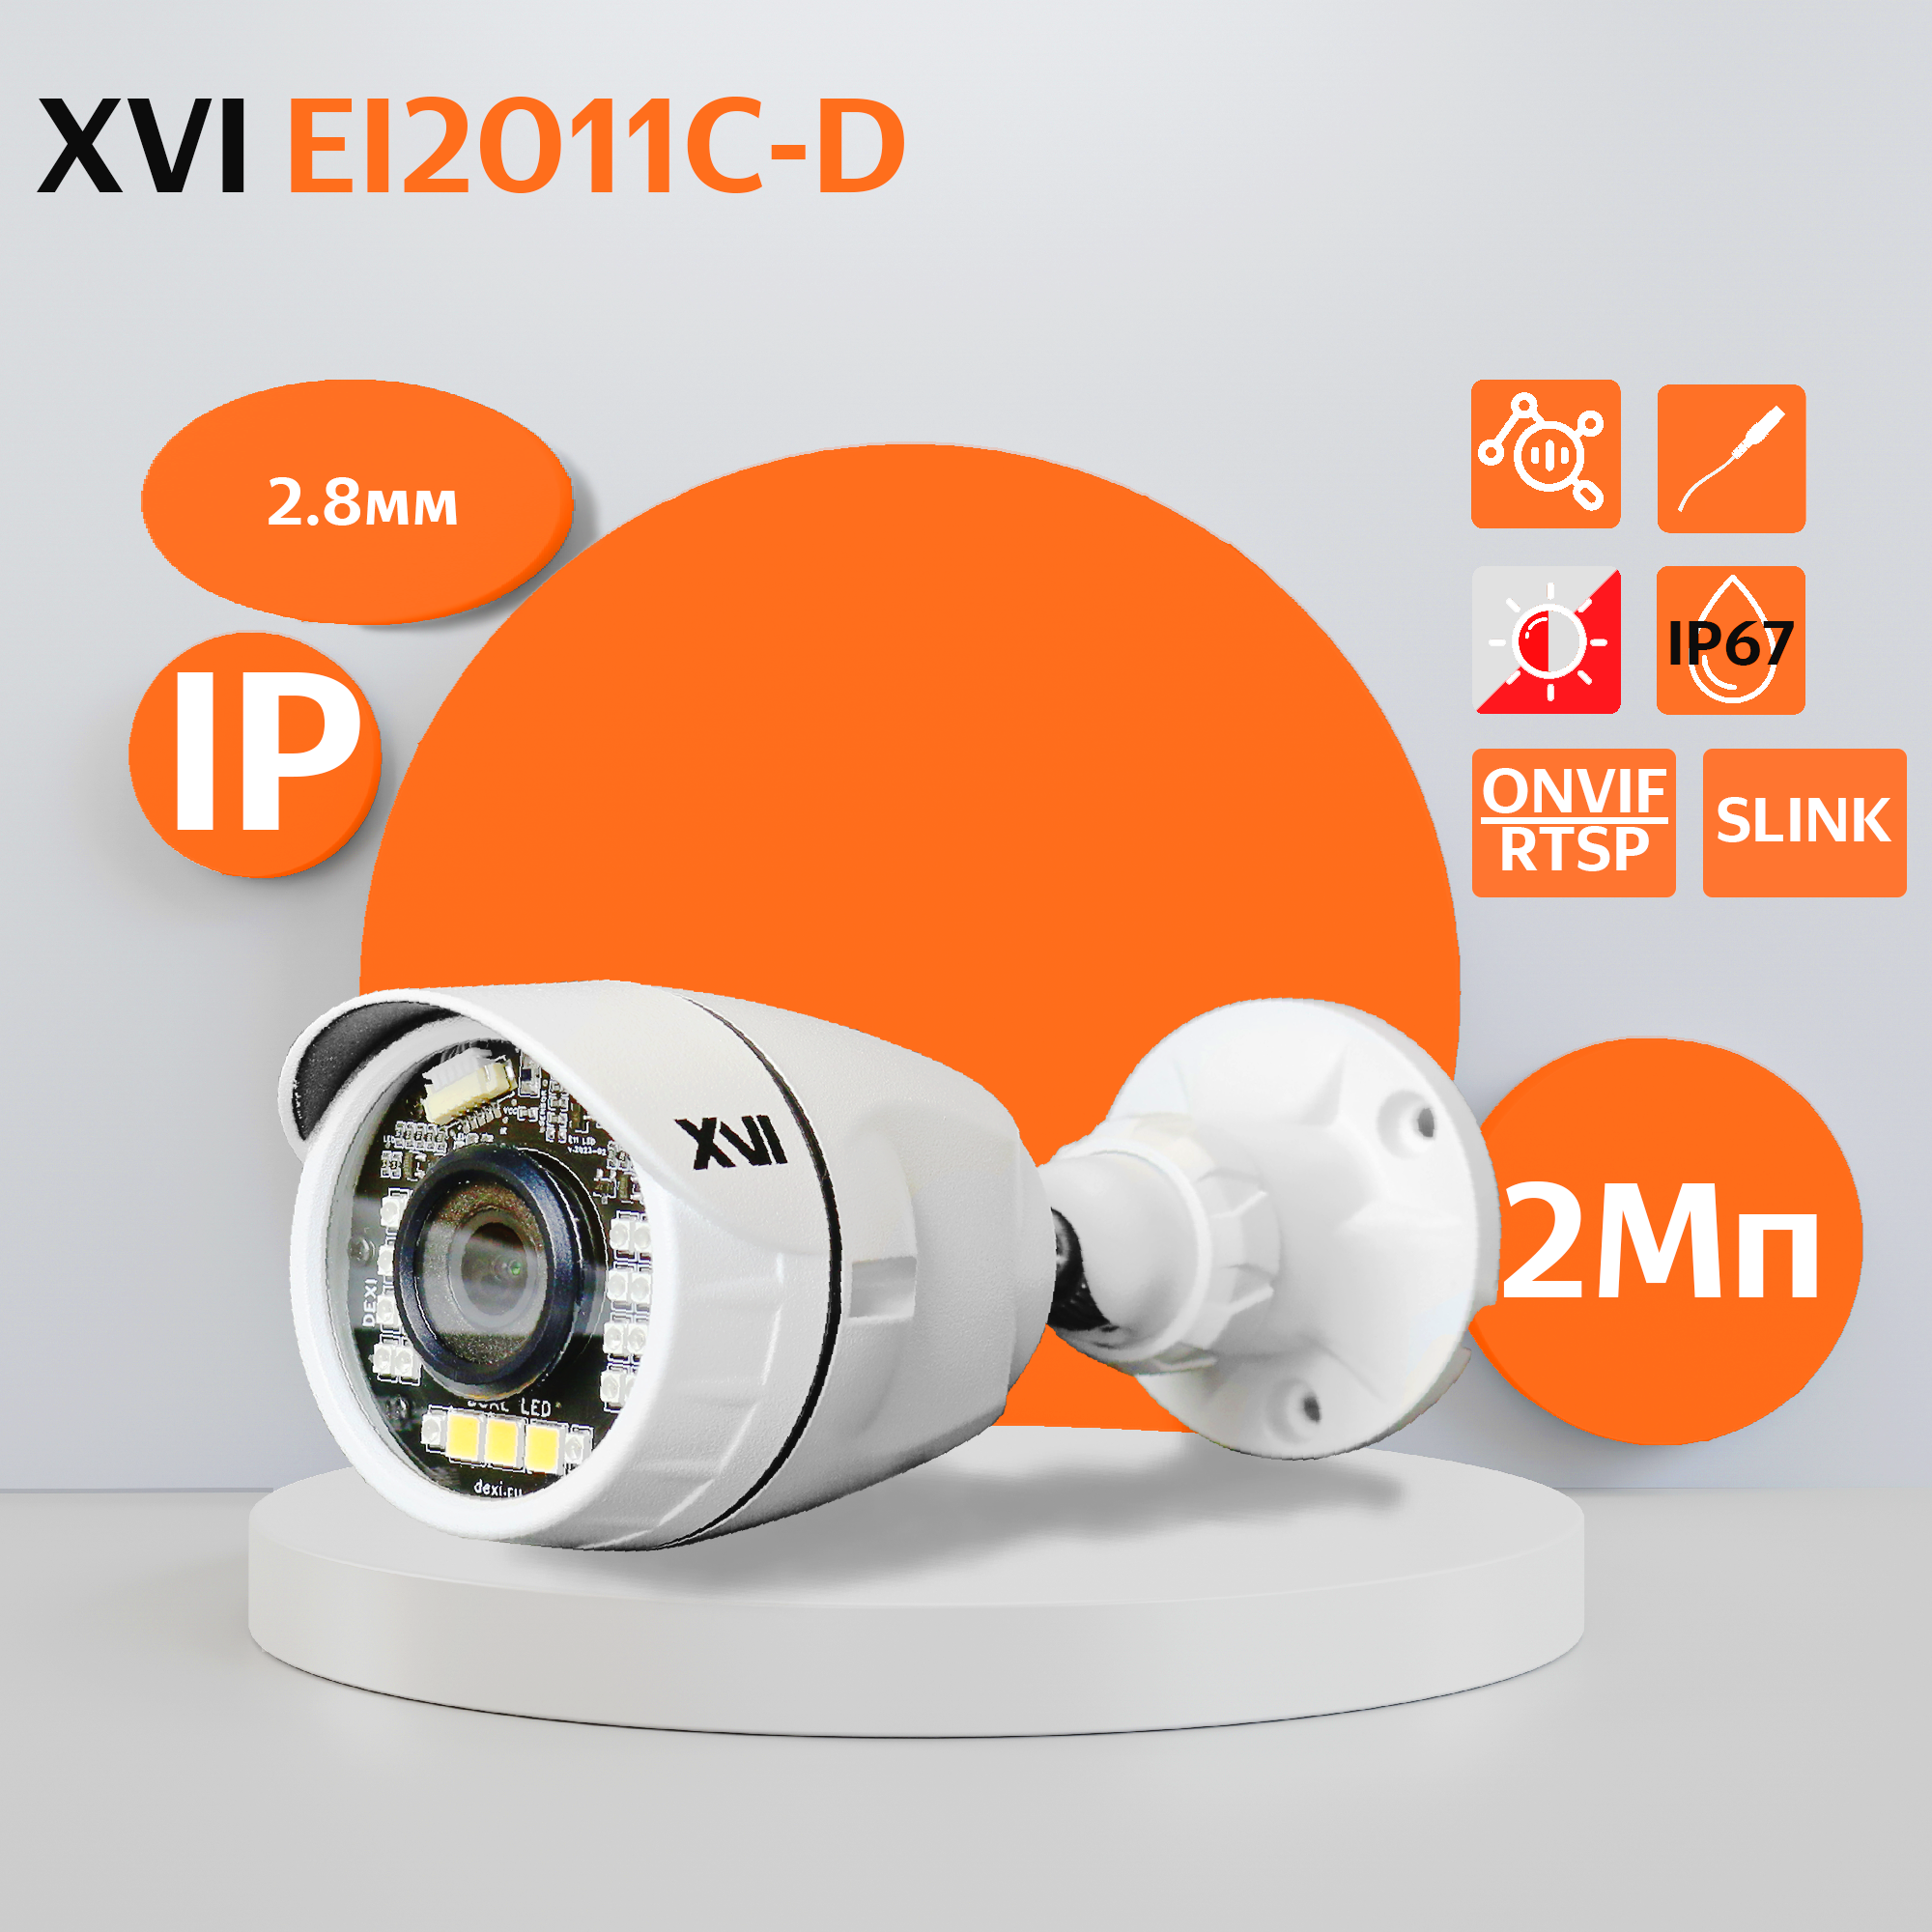 Уличная IP камера XVI EI2011C-D2.8, 2Мп, фикс.объектив, Dual Led f= 2.8мм (H94,V52) уличная ip камера xvi ei2011c 2мп фикс объектив ик ан ка f 2 8мм h115 v54